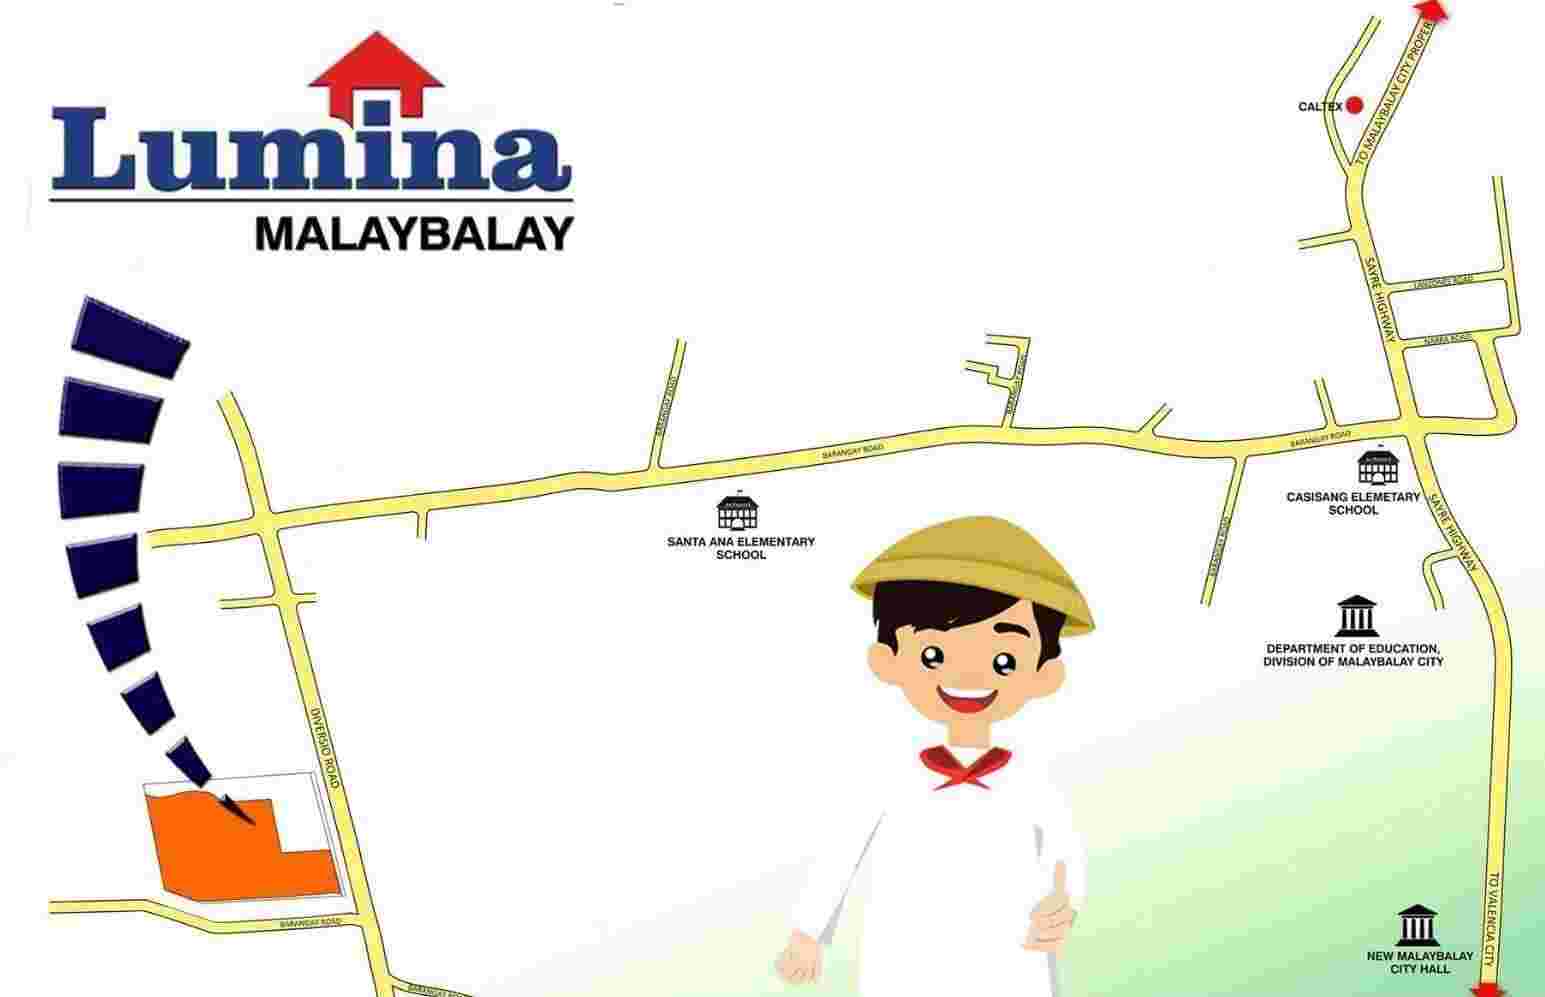 Lumina-Malaybalay-1641795612.jpg